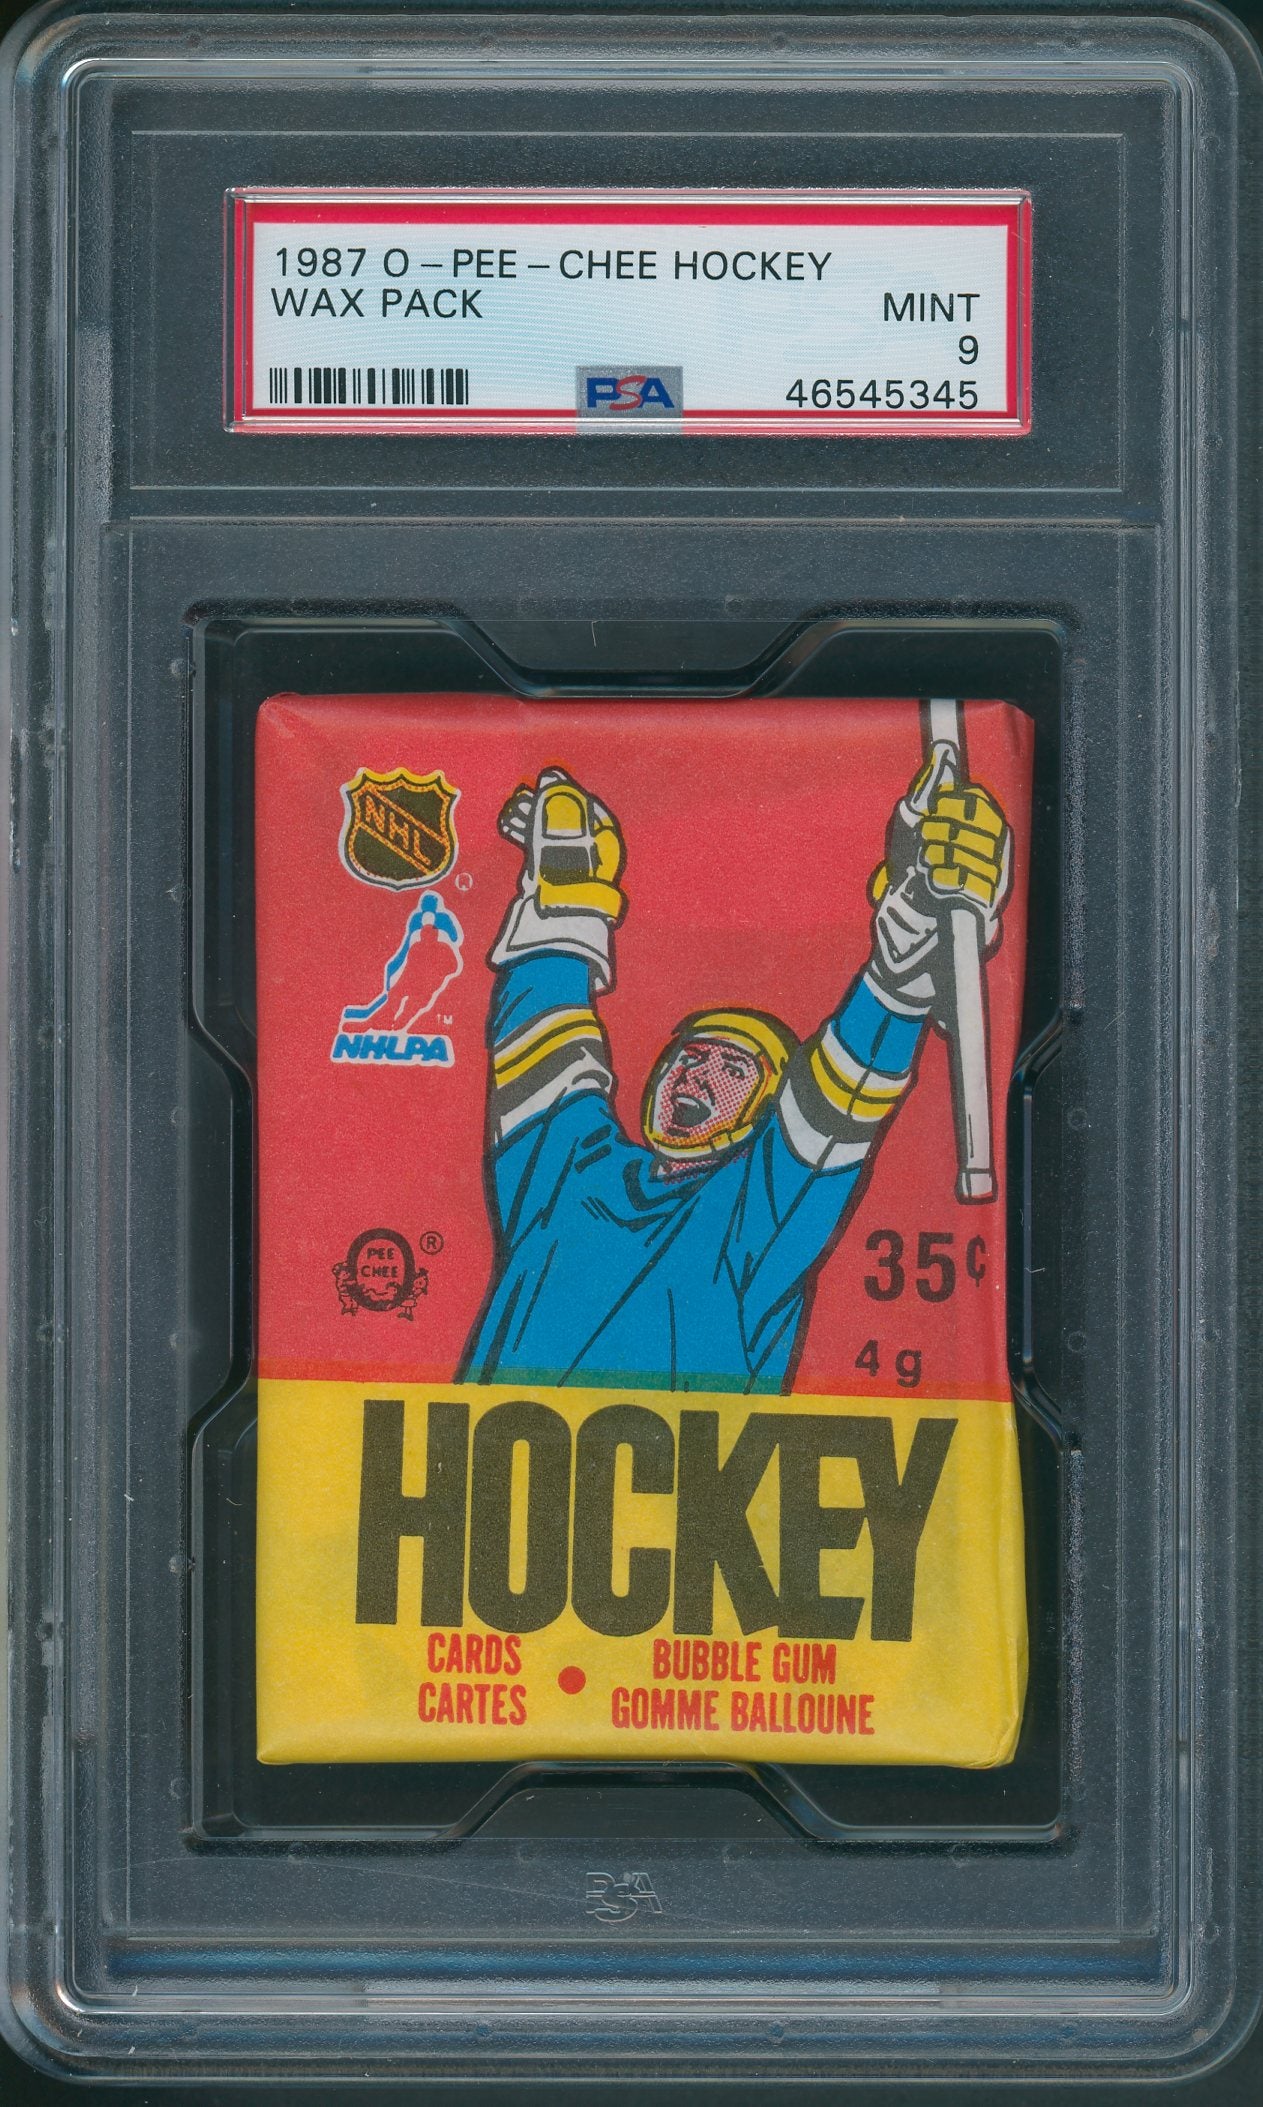 1987 1987/88 OPC O-Pee-Chee Hockey Unopened Wax Pack PSA 9